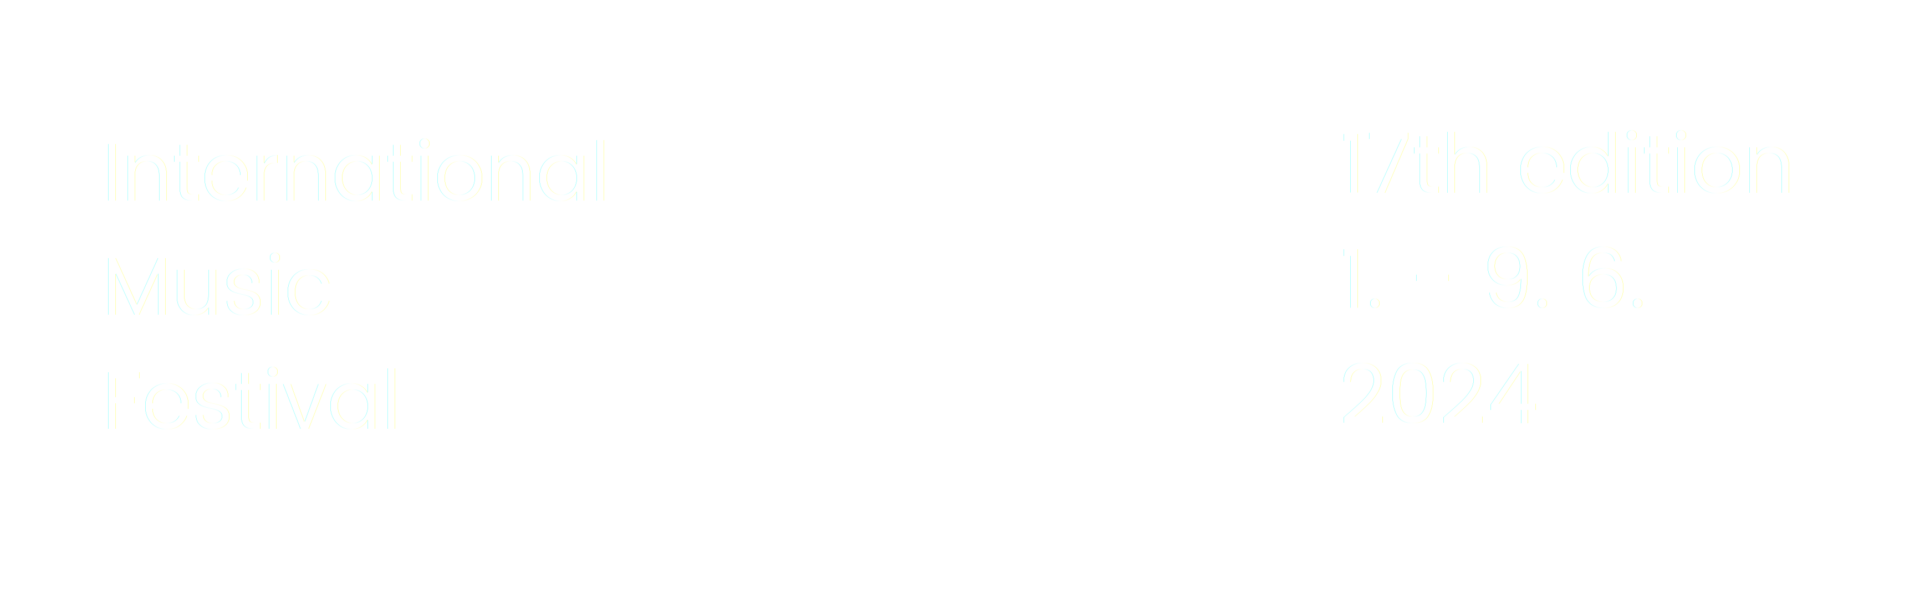 International Music Festival Kutná Hora 2016